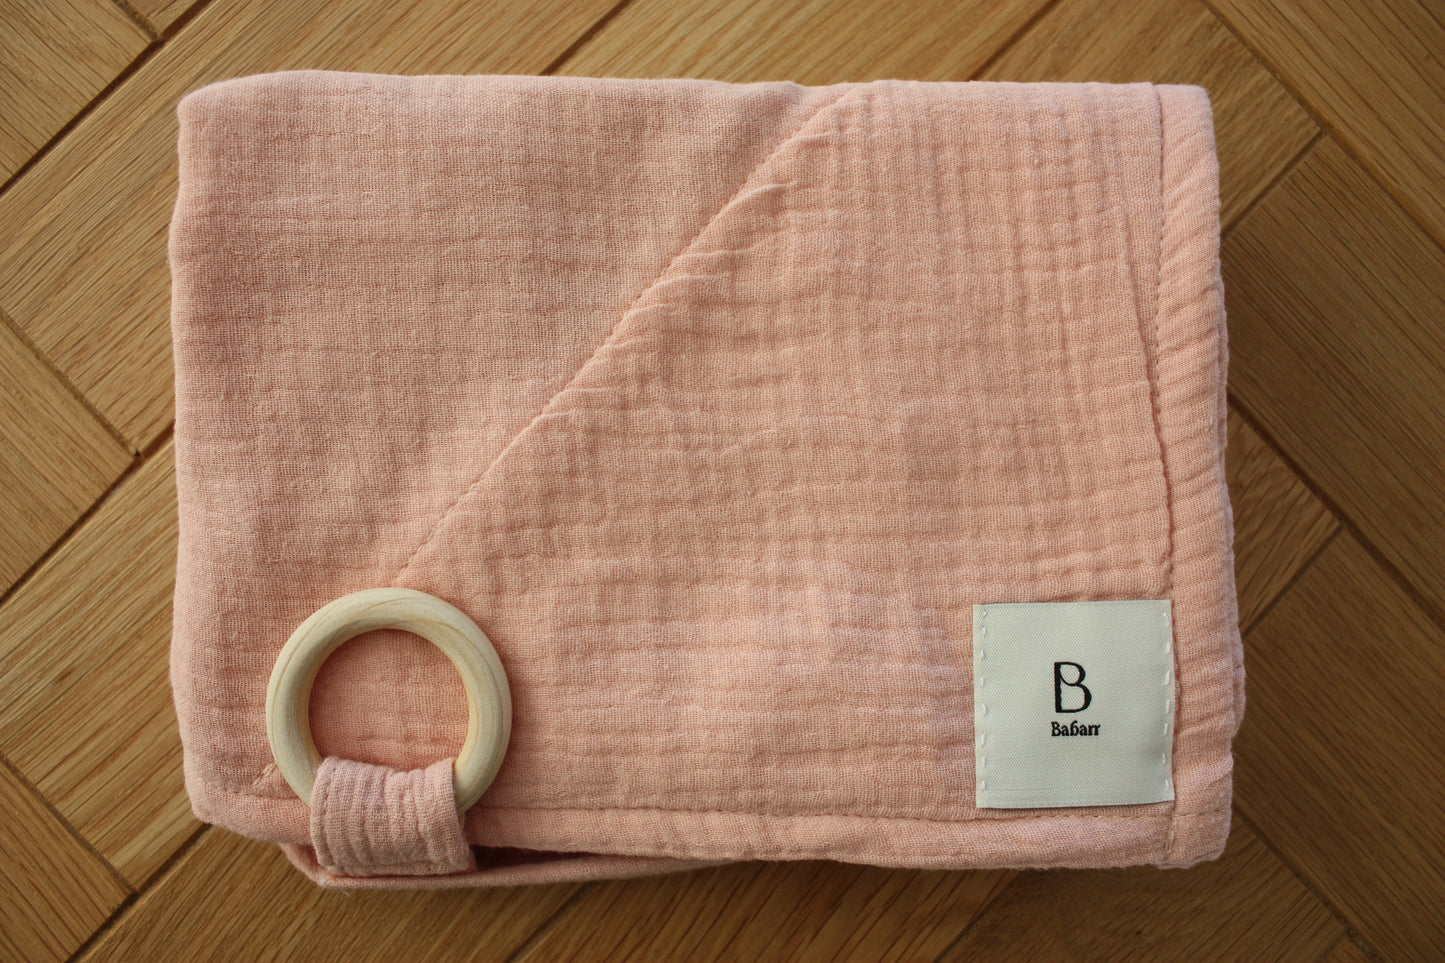 Organic cotton nursing cover - dusty pink